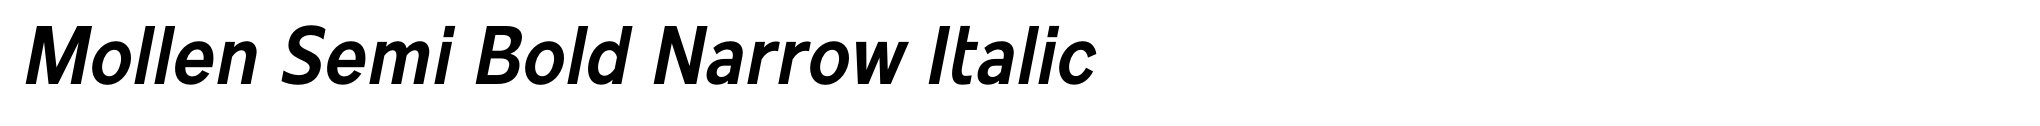 Mollen Semi Bold Narrow Italic image